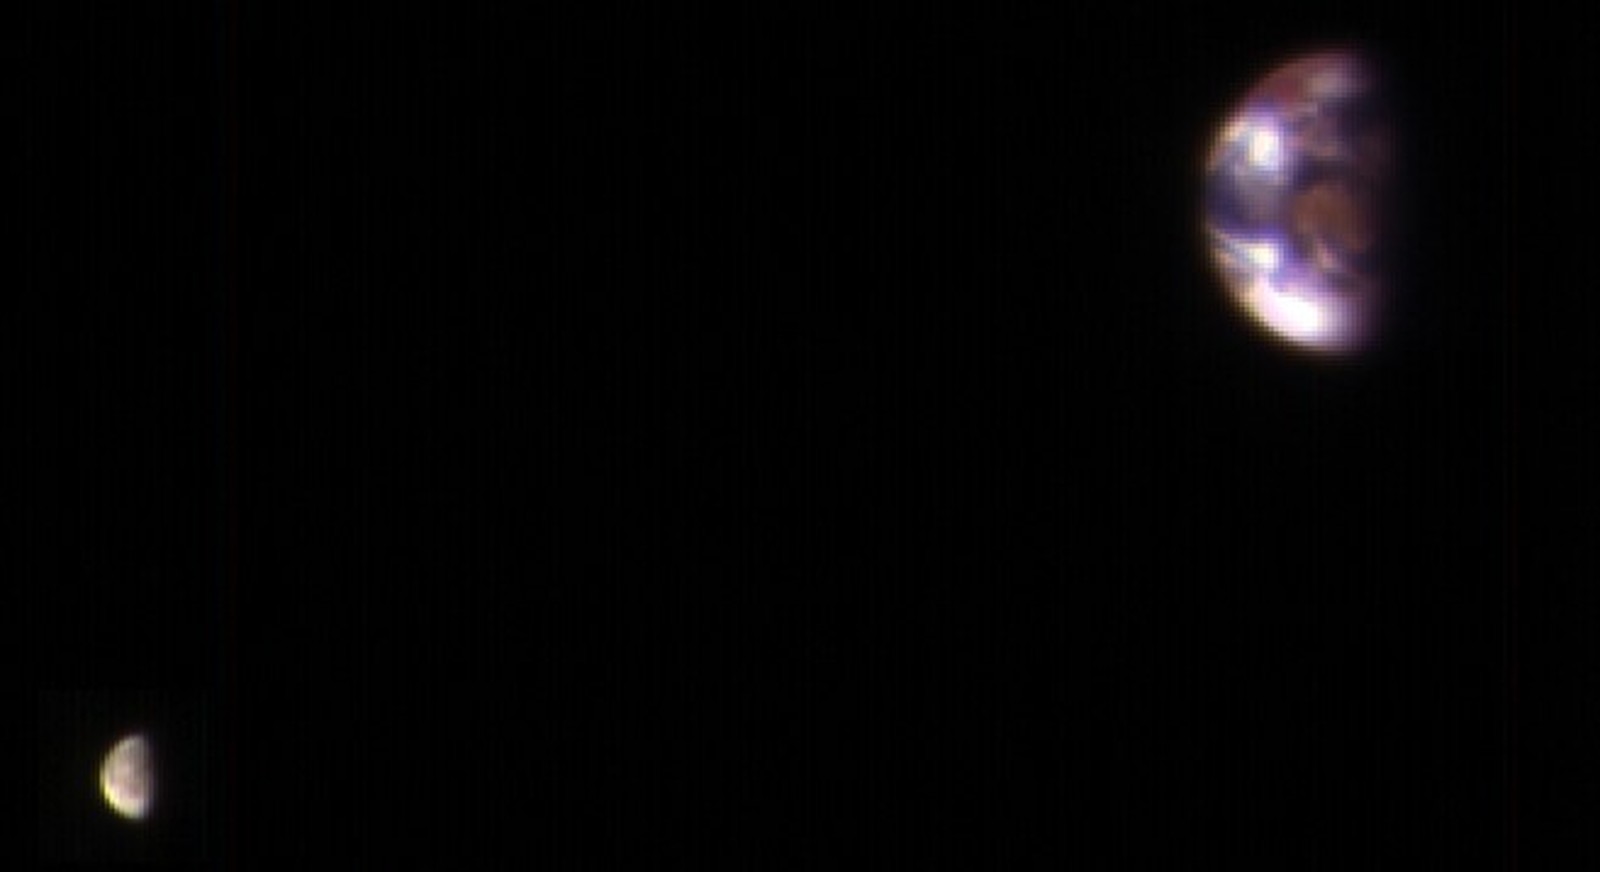 Terra, Marte, Nasa (Foto: NASA/JPL-CALTECH/UNIV. OF ARIZONA)